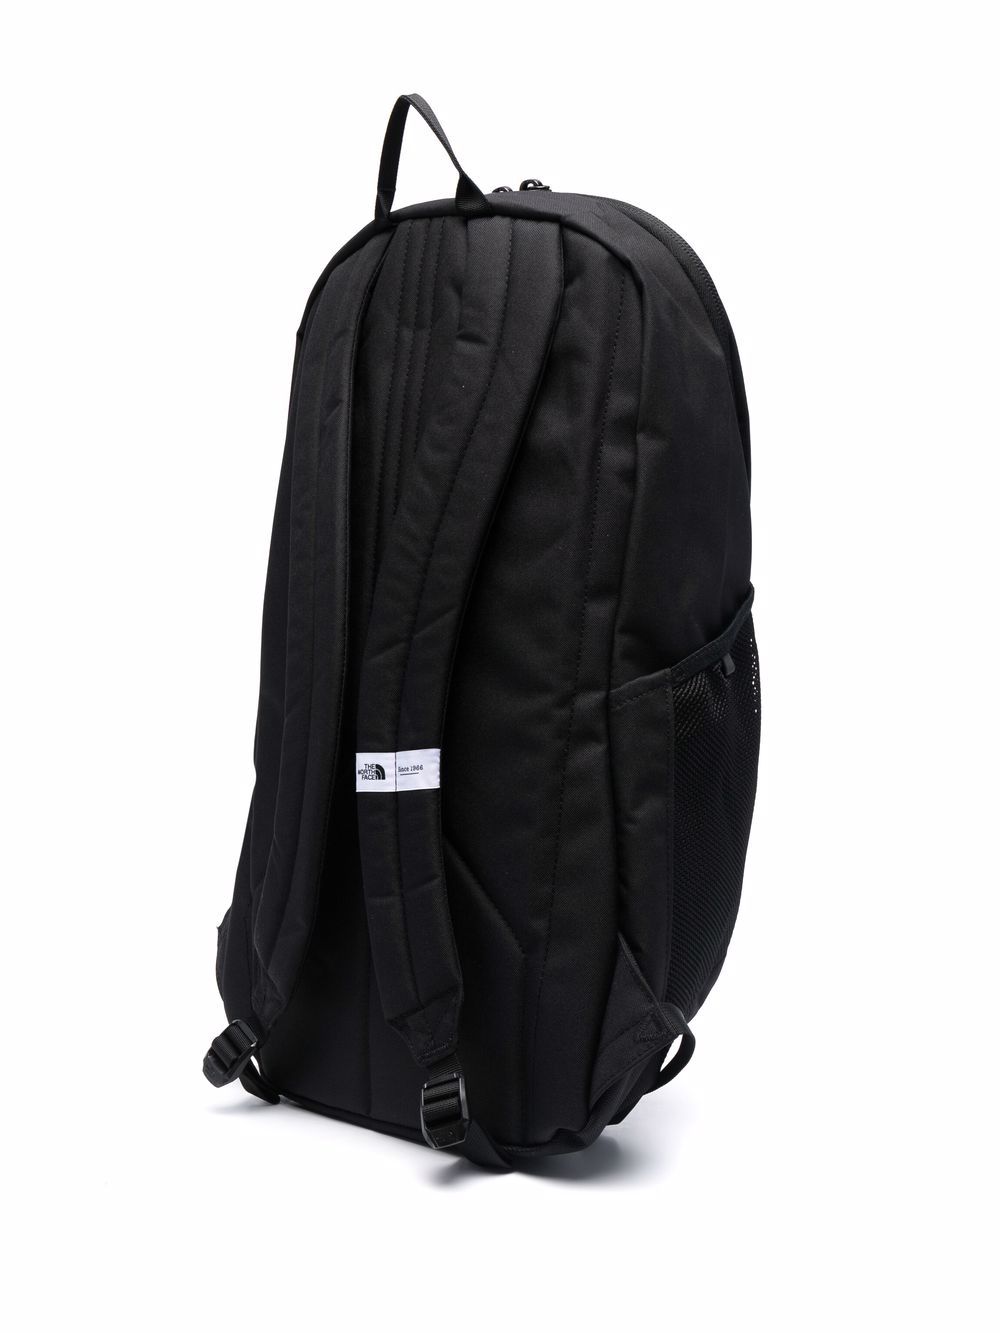 фото The north face рюкзак на молнии с вышитым логотипом